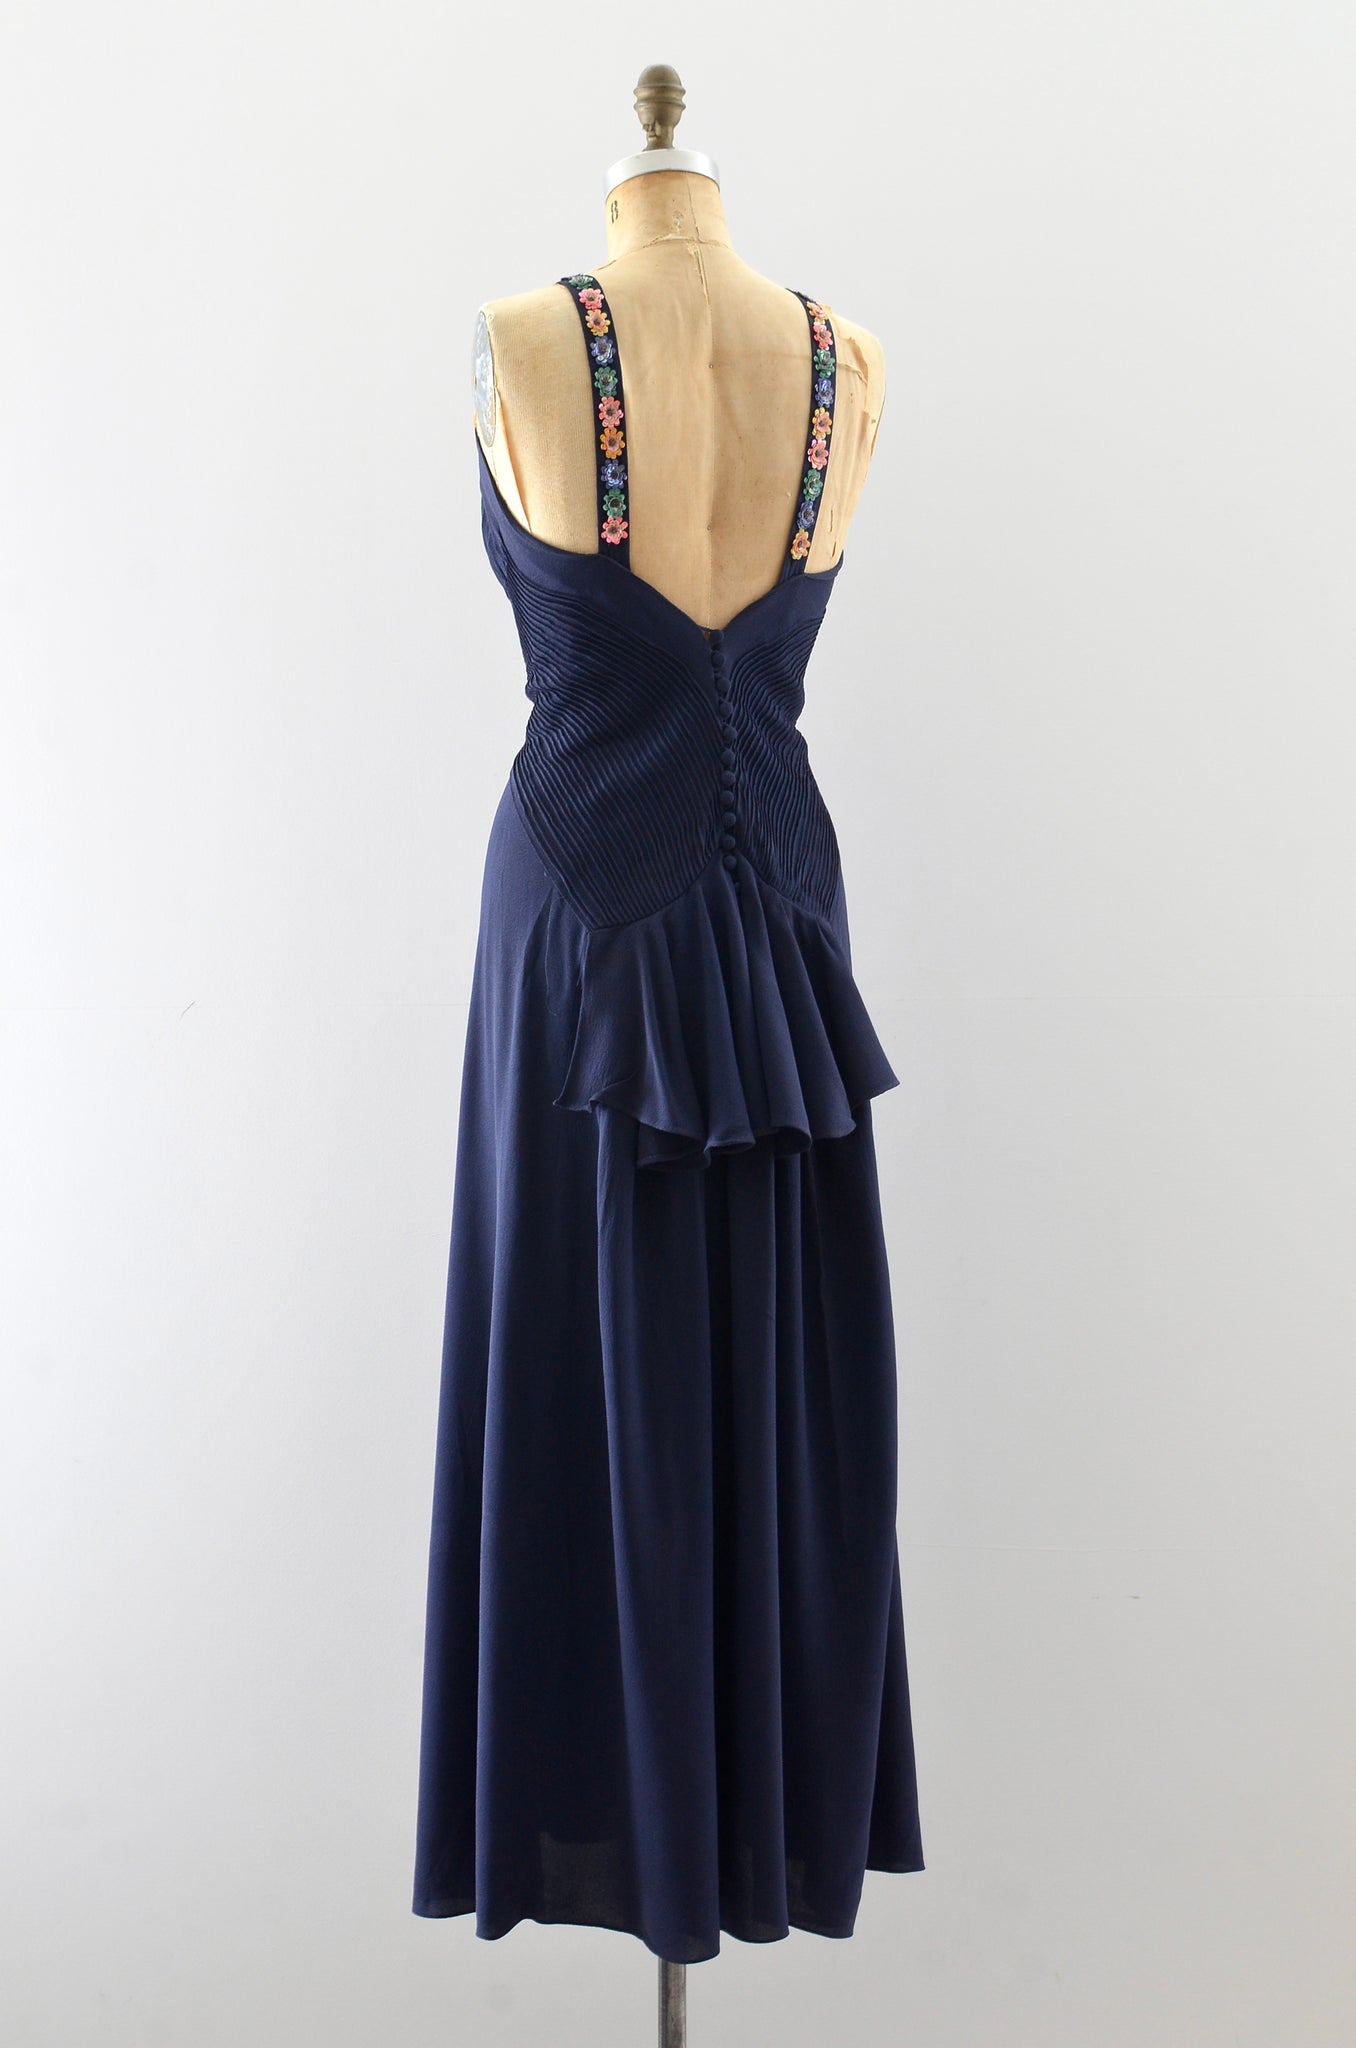 Vintage 1930's Navy Blue Dress